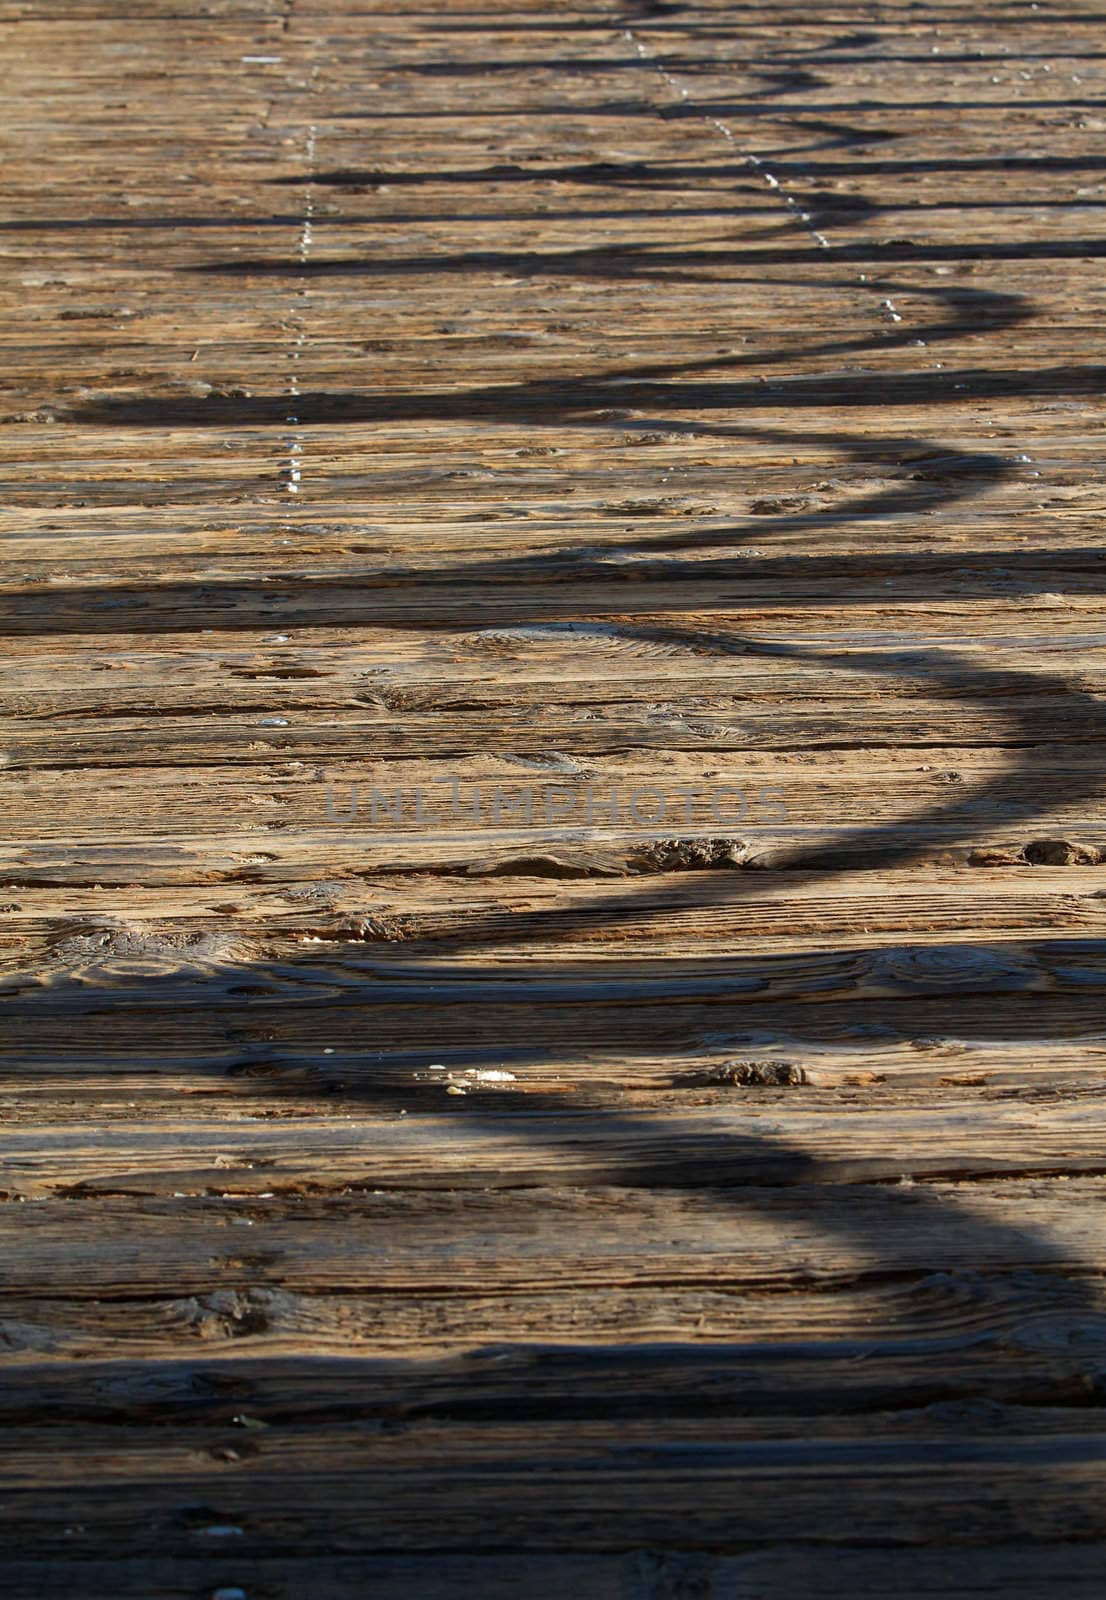 Old wood boardwalk or sidewalk with shadow of rope barrierz